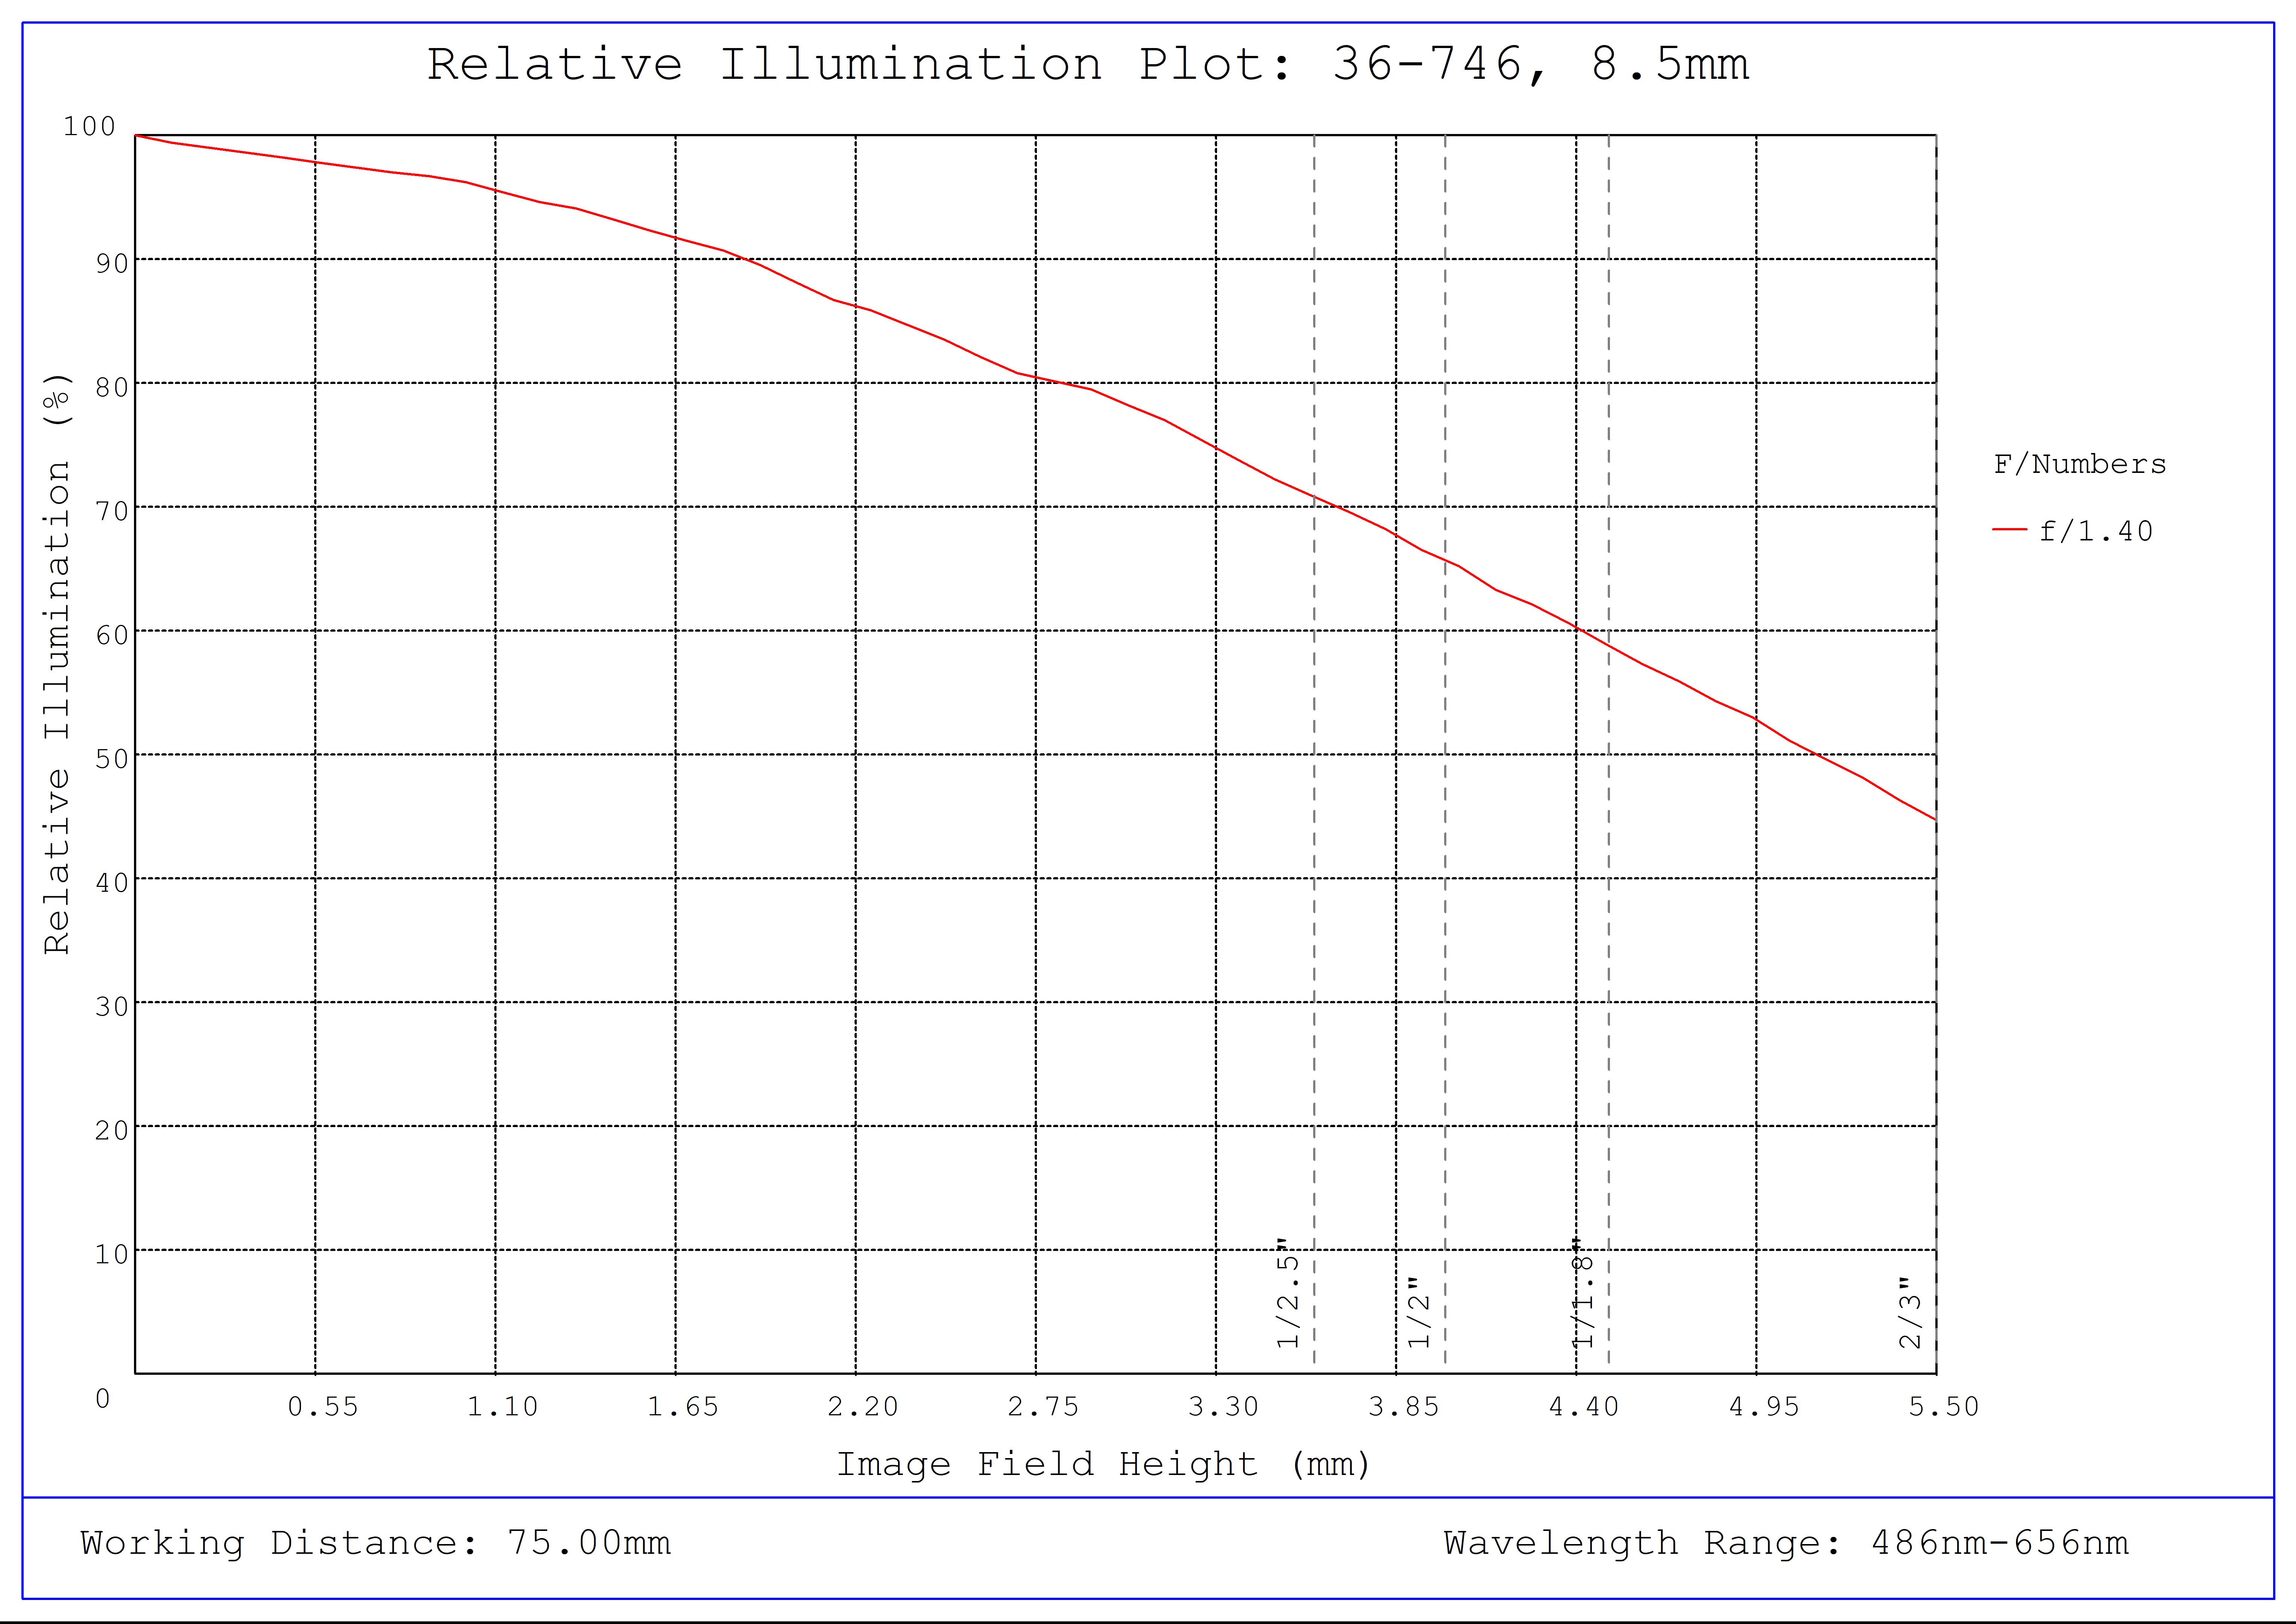 #36-746, 8.5mm f/1.4, 75mm-∞ Primary WD, HRi Series Fixed Focal Length Lens, Relative Illumination Plot